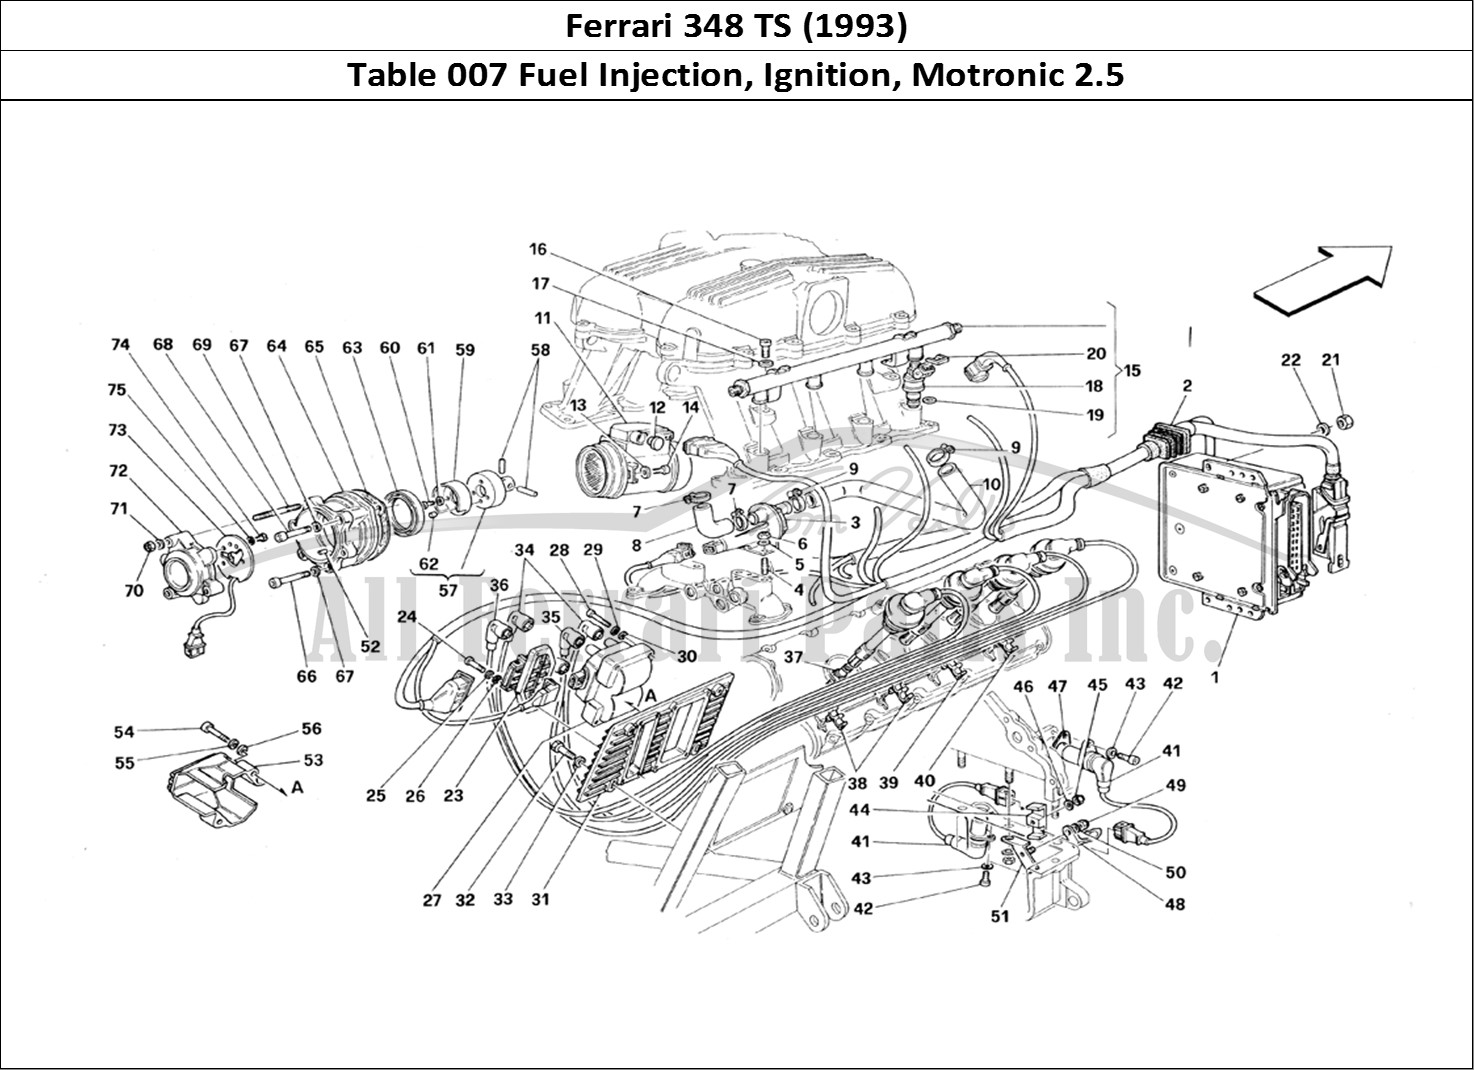 Ferrari Parts Ferrari 348 TB (1993) Page 007 Air Injection - Ignition